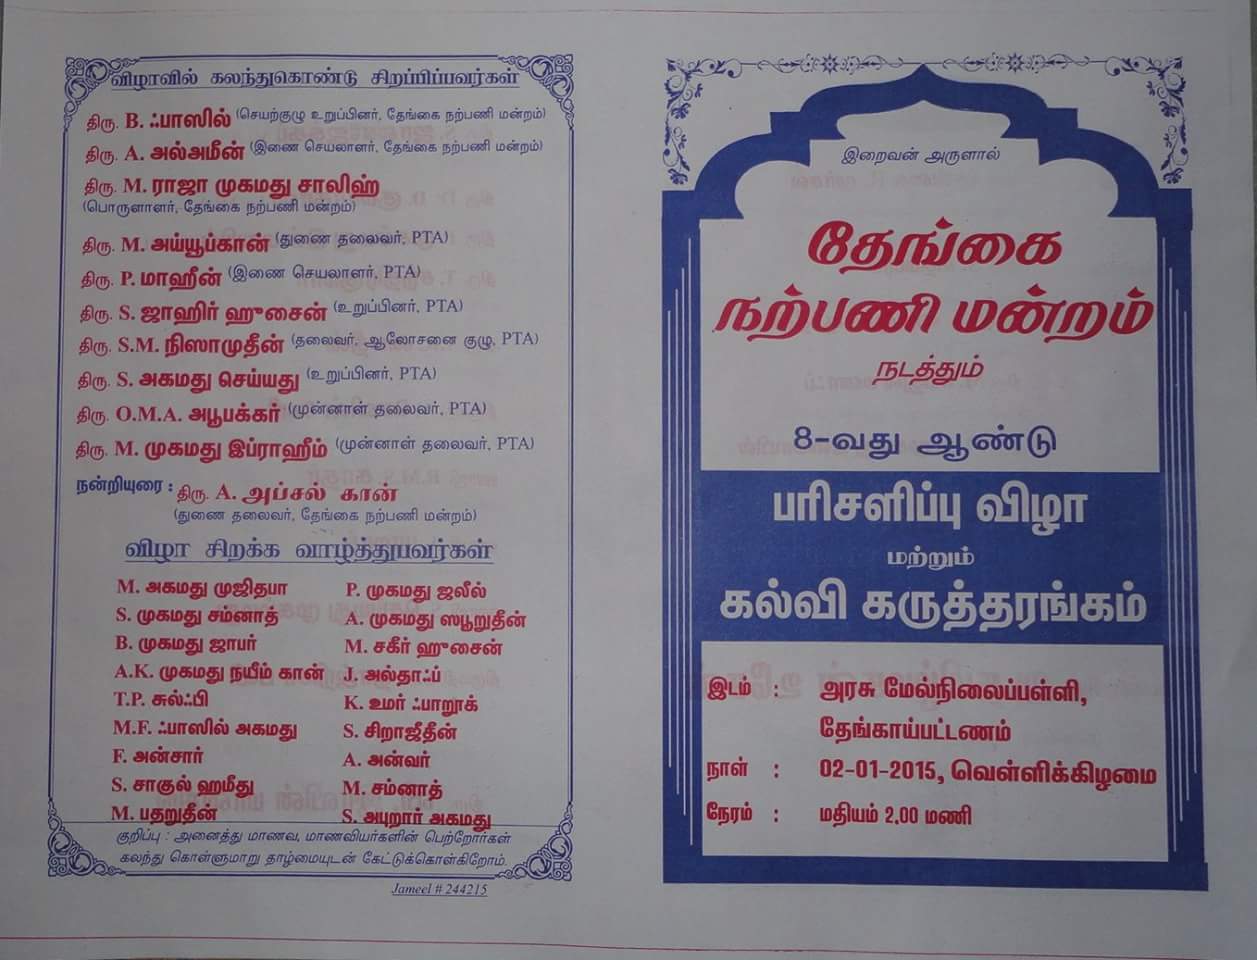 TNM Prize Distribution and Kalvi Karutharangam